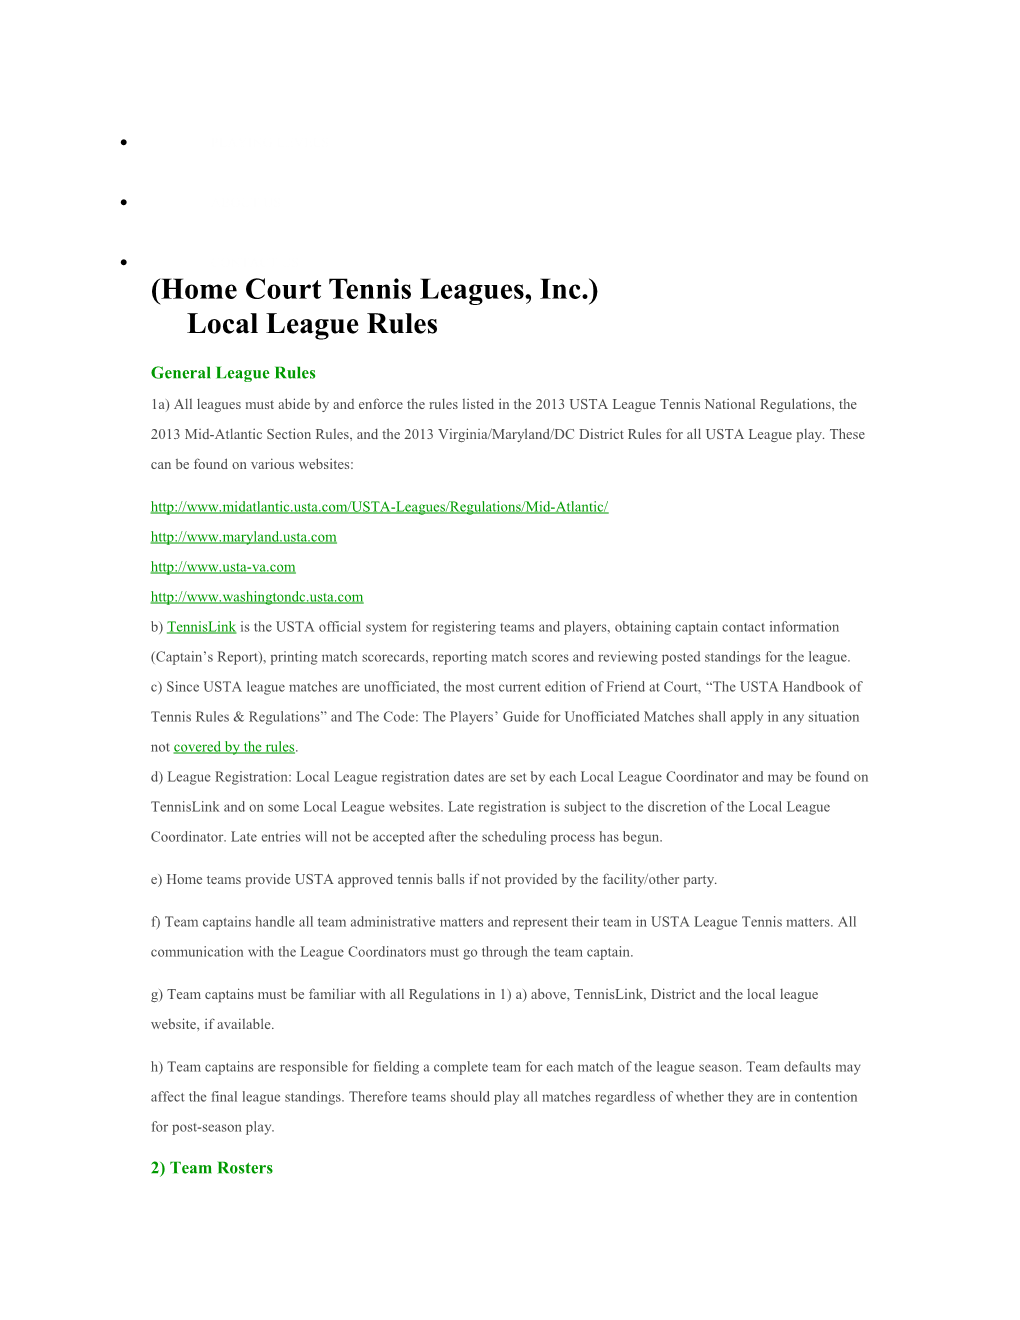 (Home Court Tennis Leagues, Inc.)Local League Rules